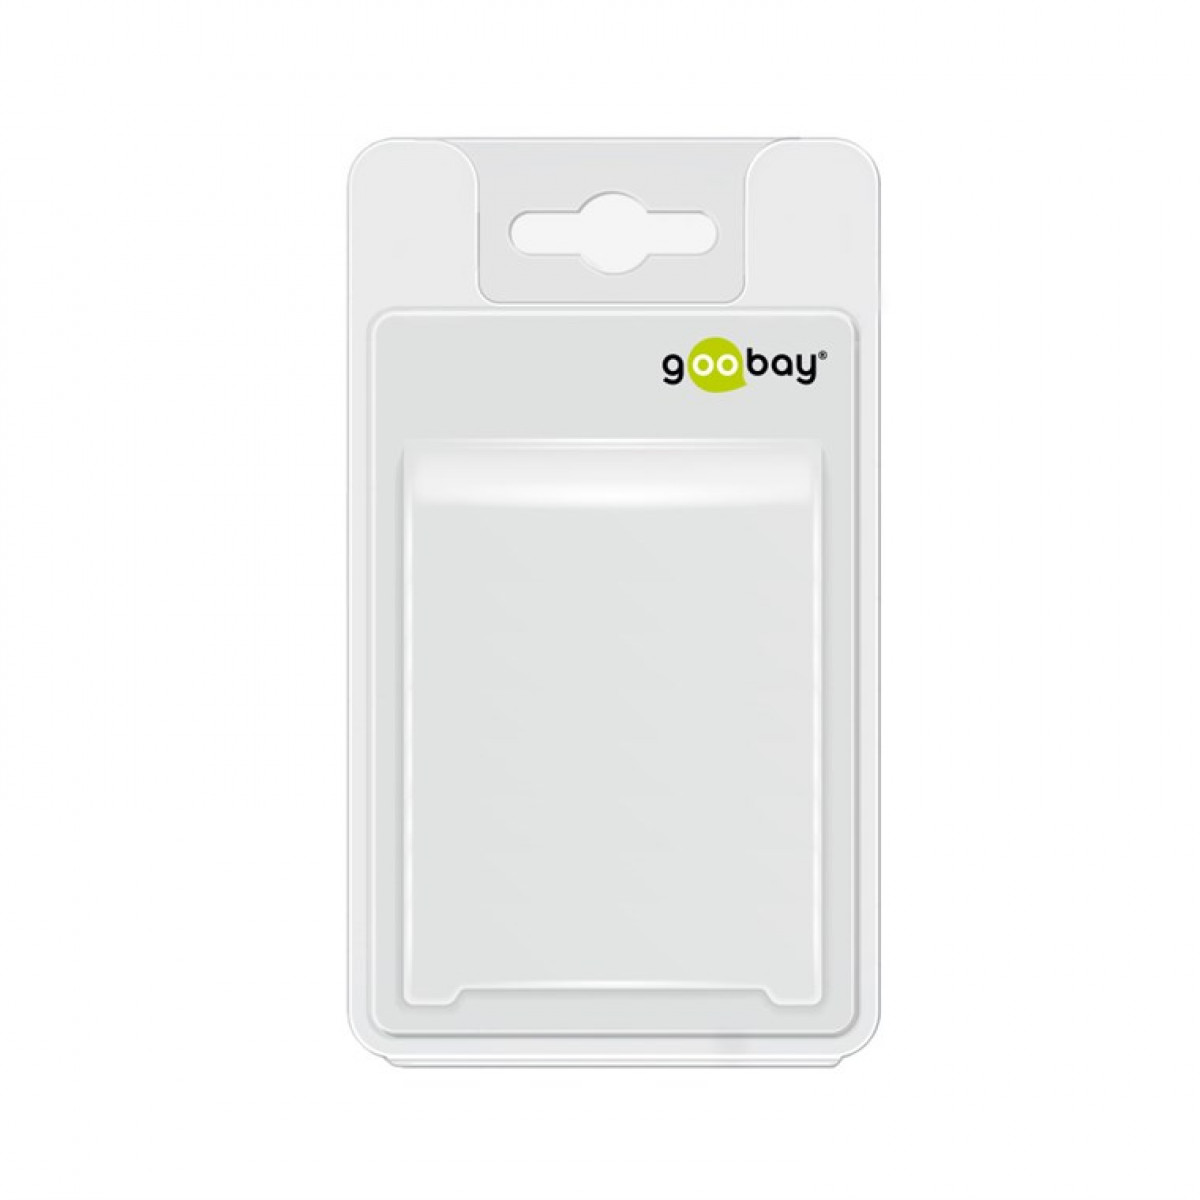 GOOBAY USB 3.0 Kartenlesegerät Kartenleser